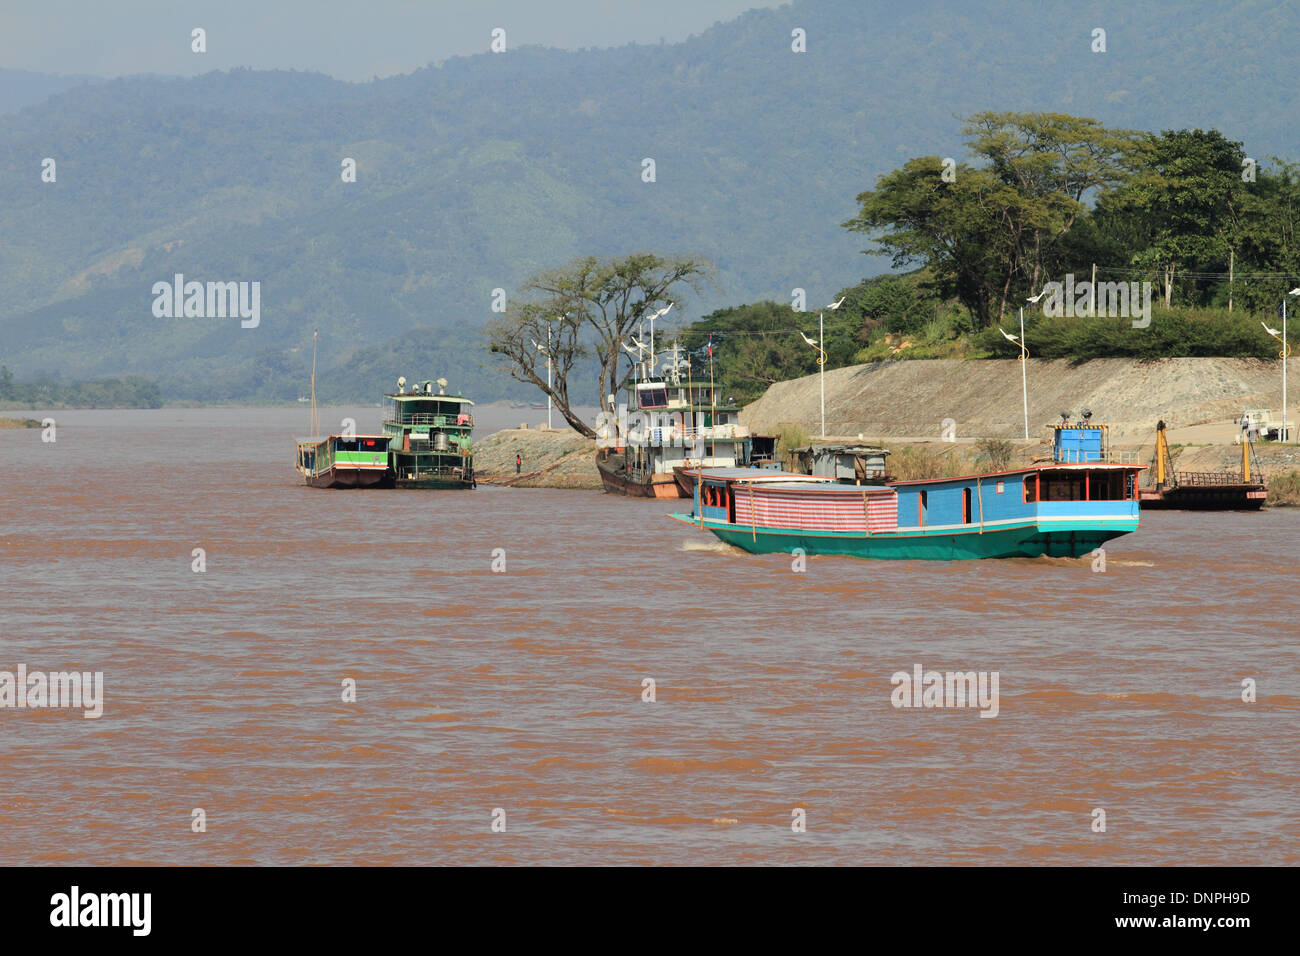 Nave passeggeri sul Mekong, loa custom house, triangolo d oro Foto Stock